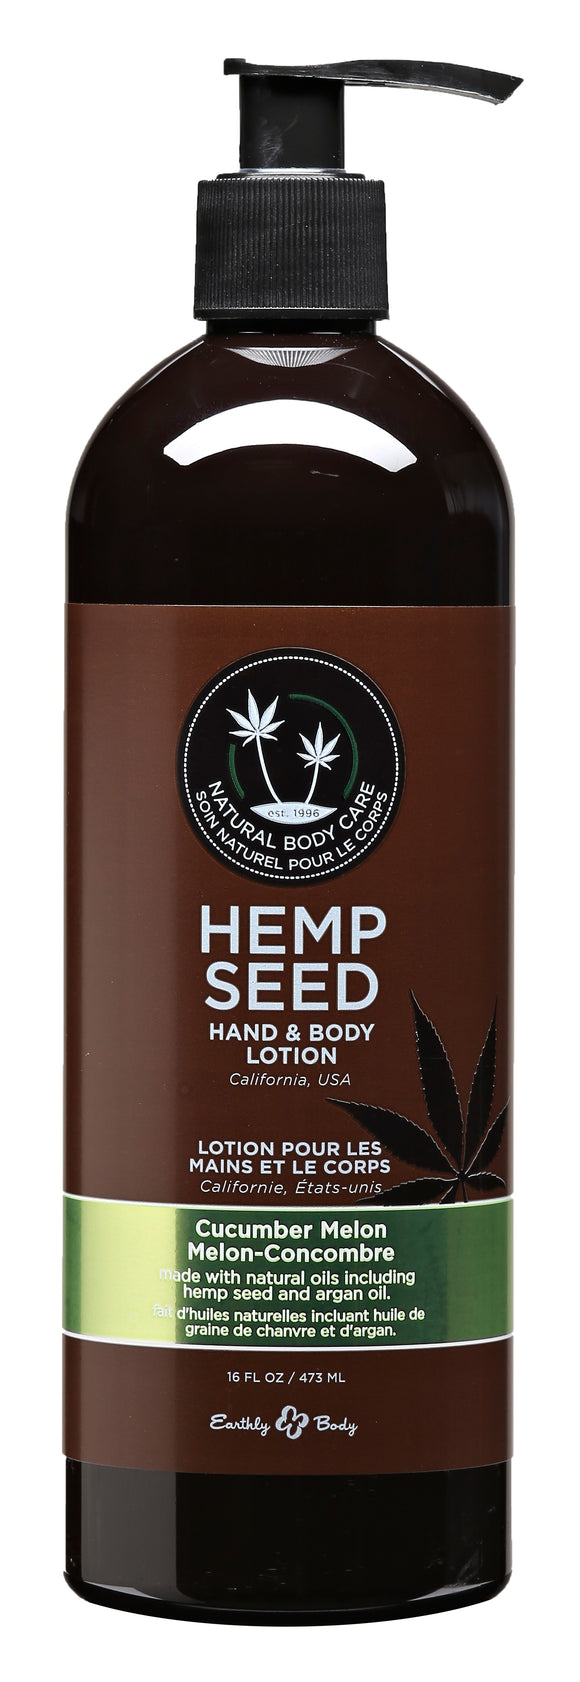 Hemp Seed Hand and Body Lotion - 16 Fl. Oz. - Cucumber Melon EB-HSV210